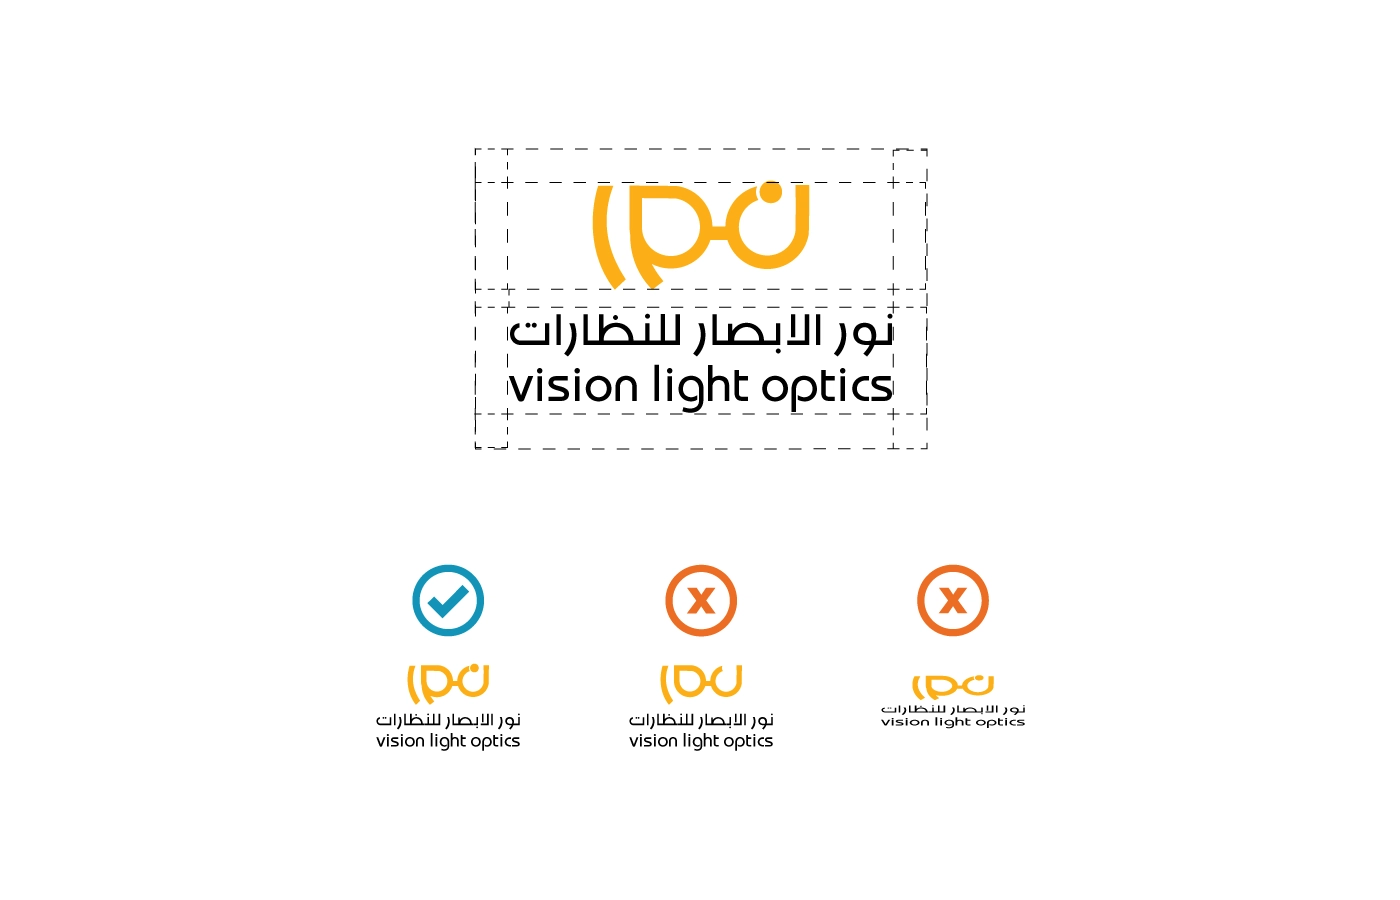 Vision light optics